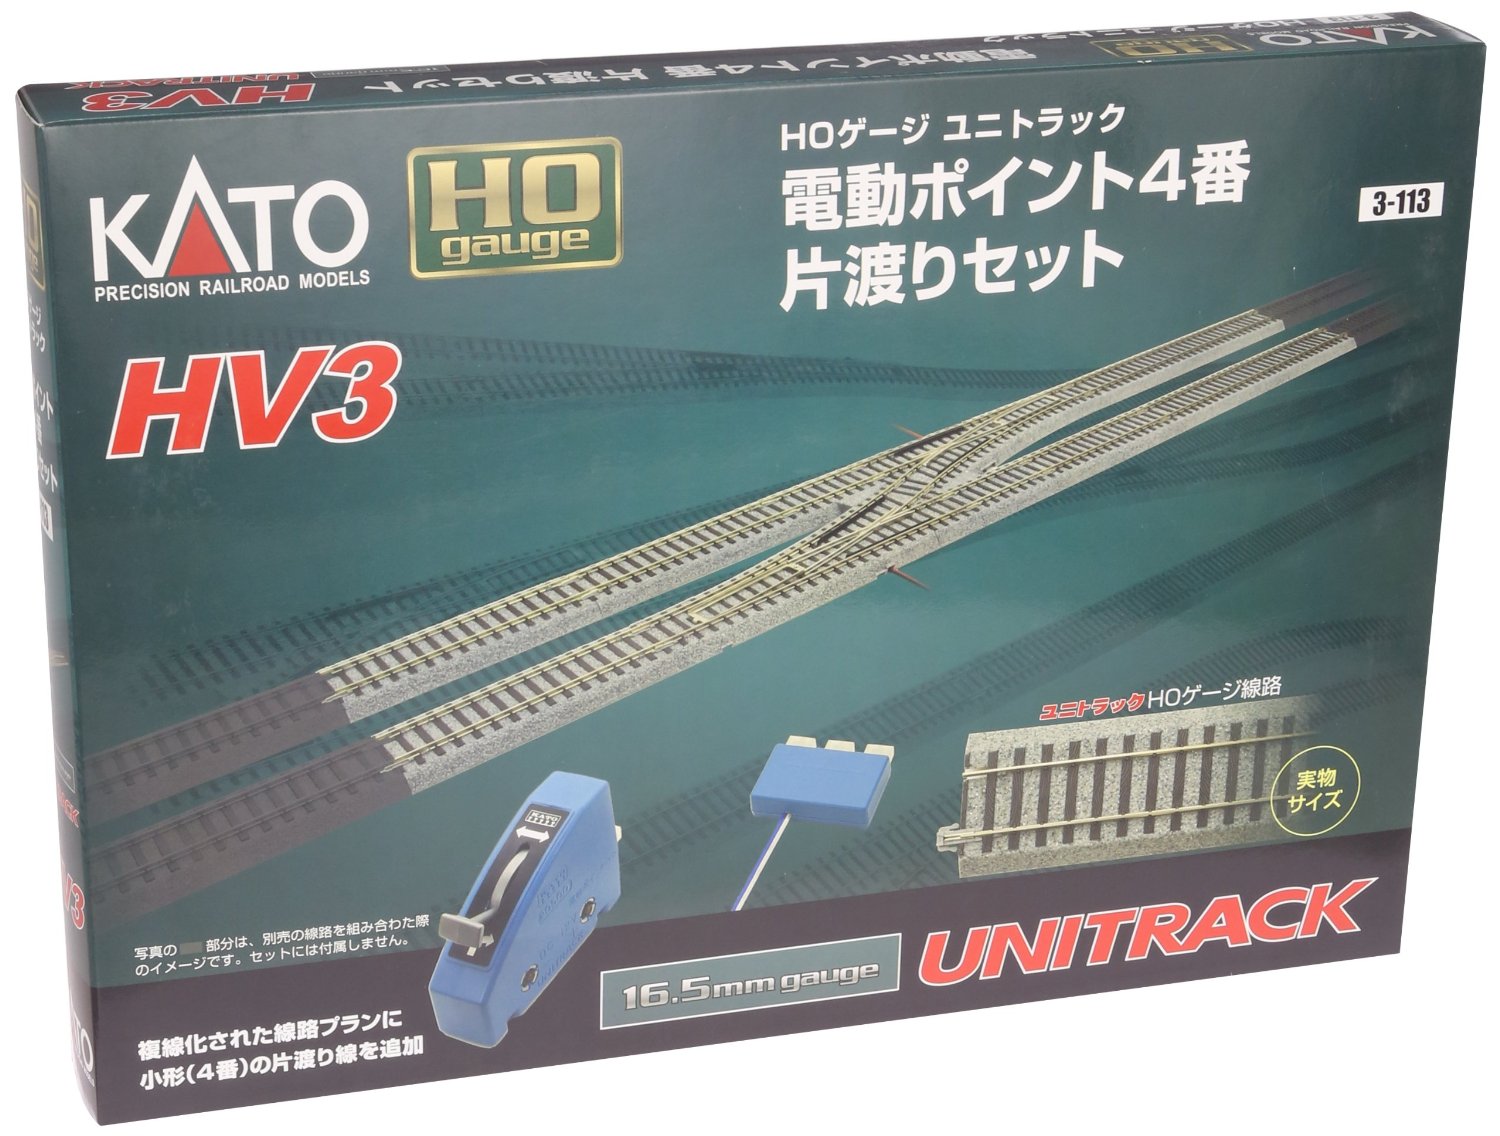 3-113 Unitrack HV3 Electric Points #4 Single Slip Crossing Track